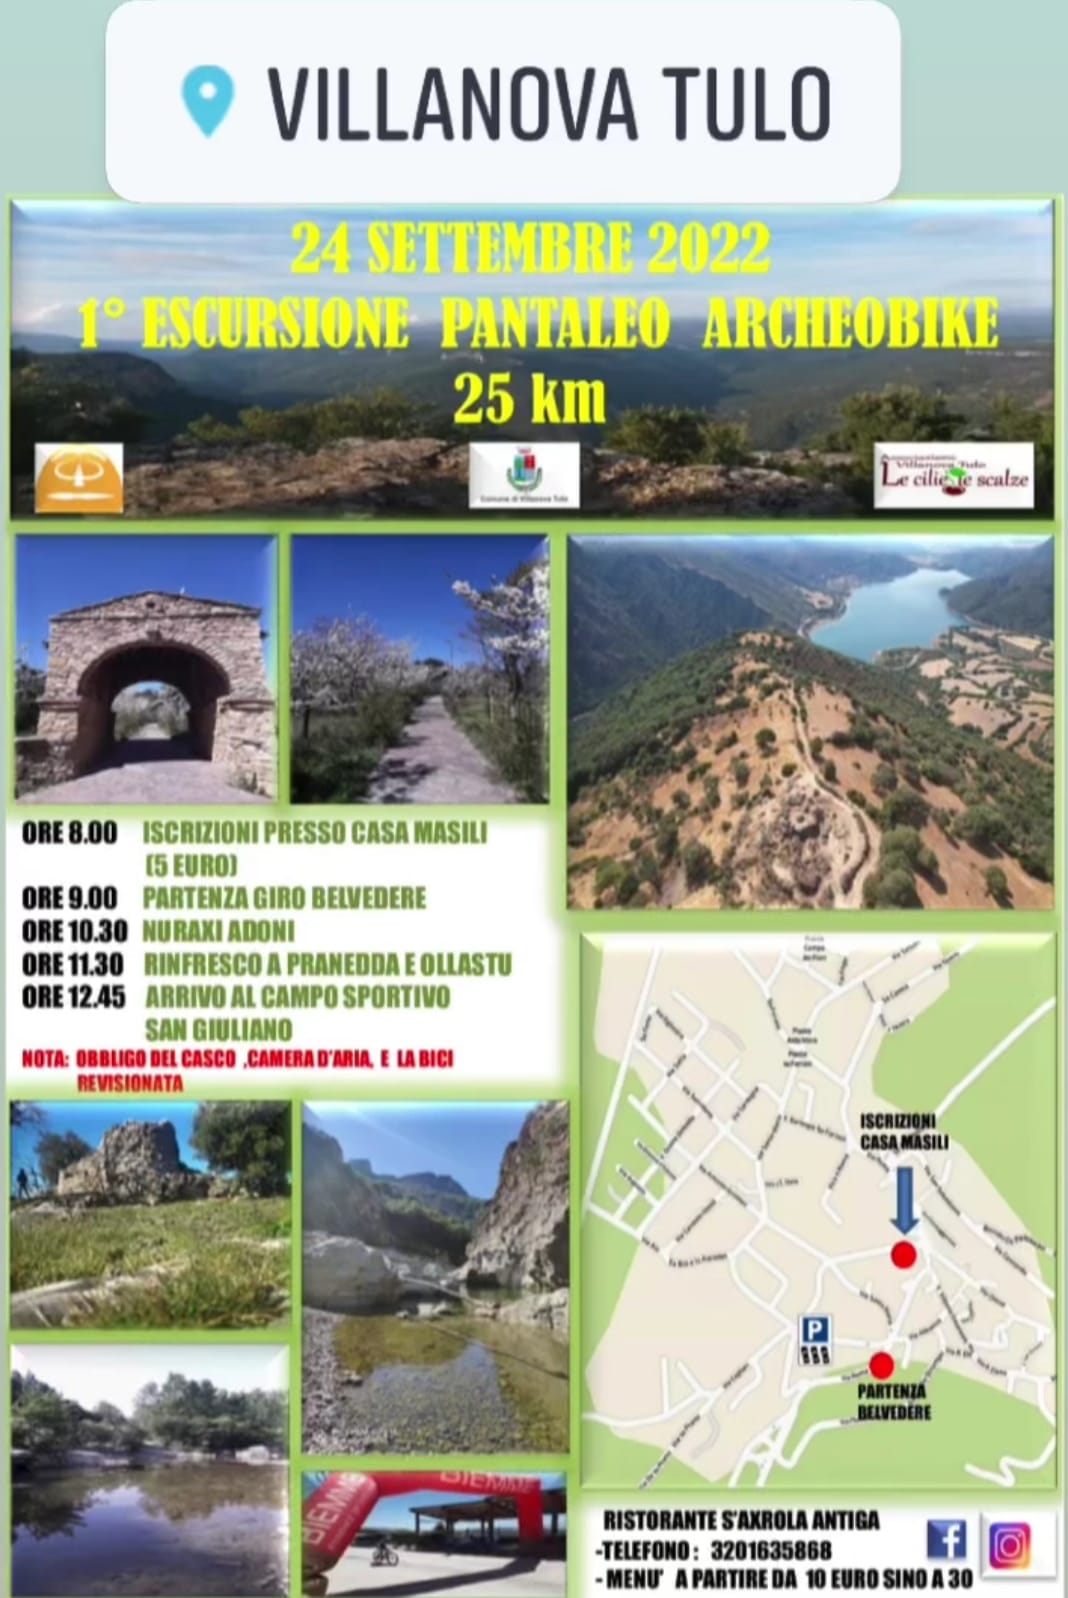 Escursione Pantaleo Archeobike